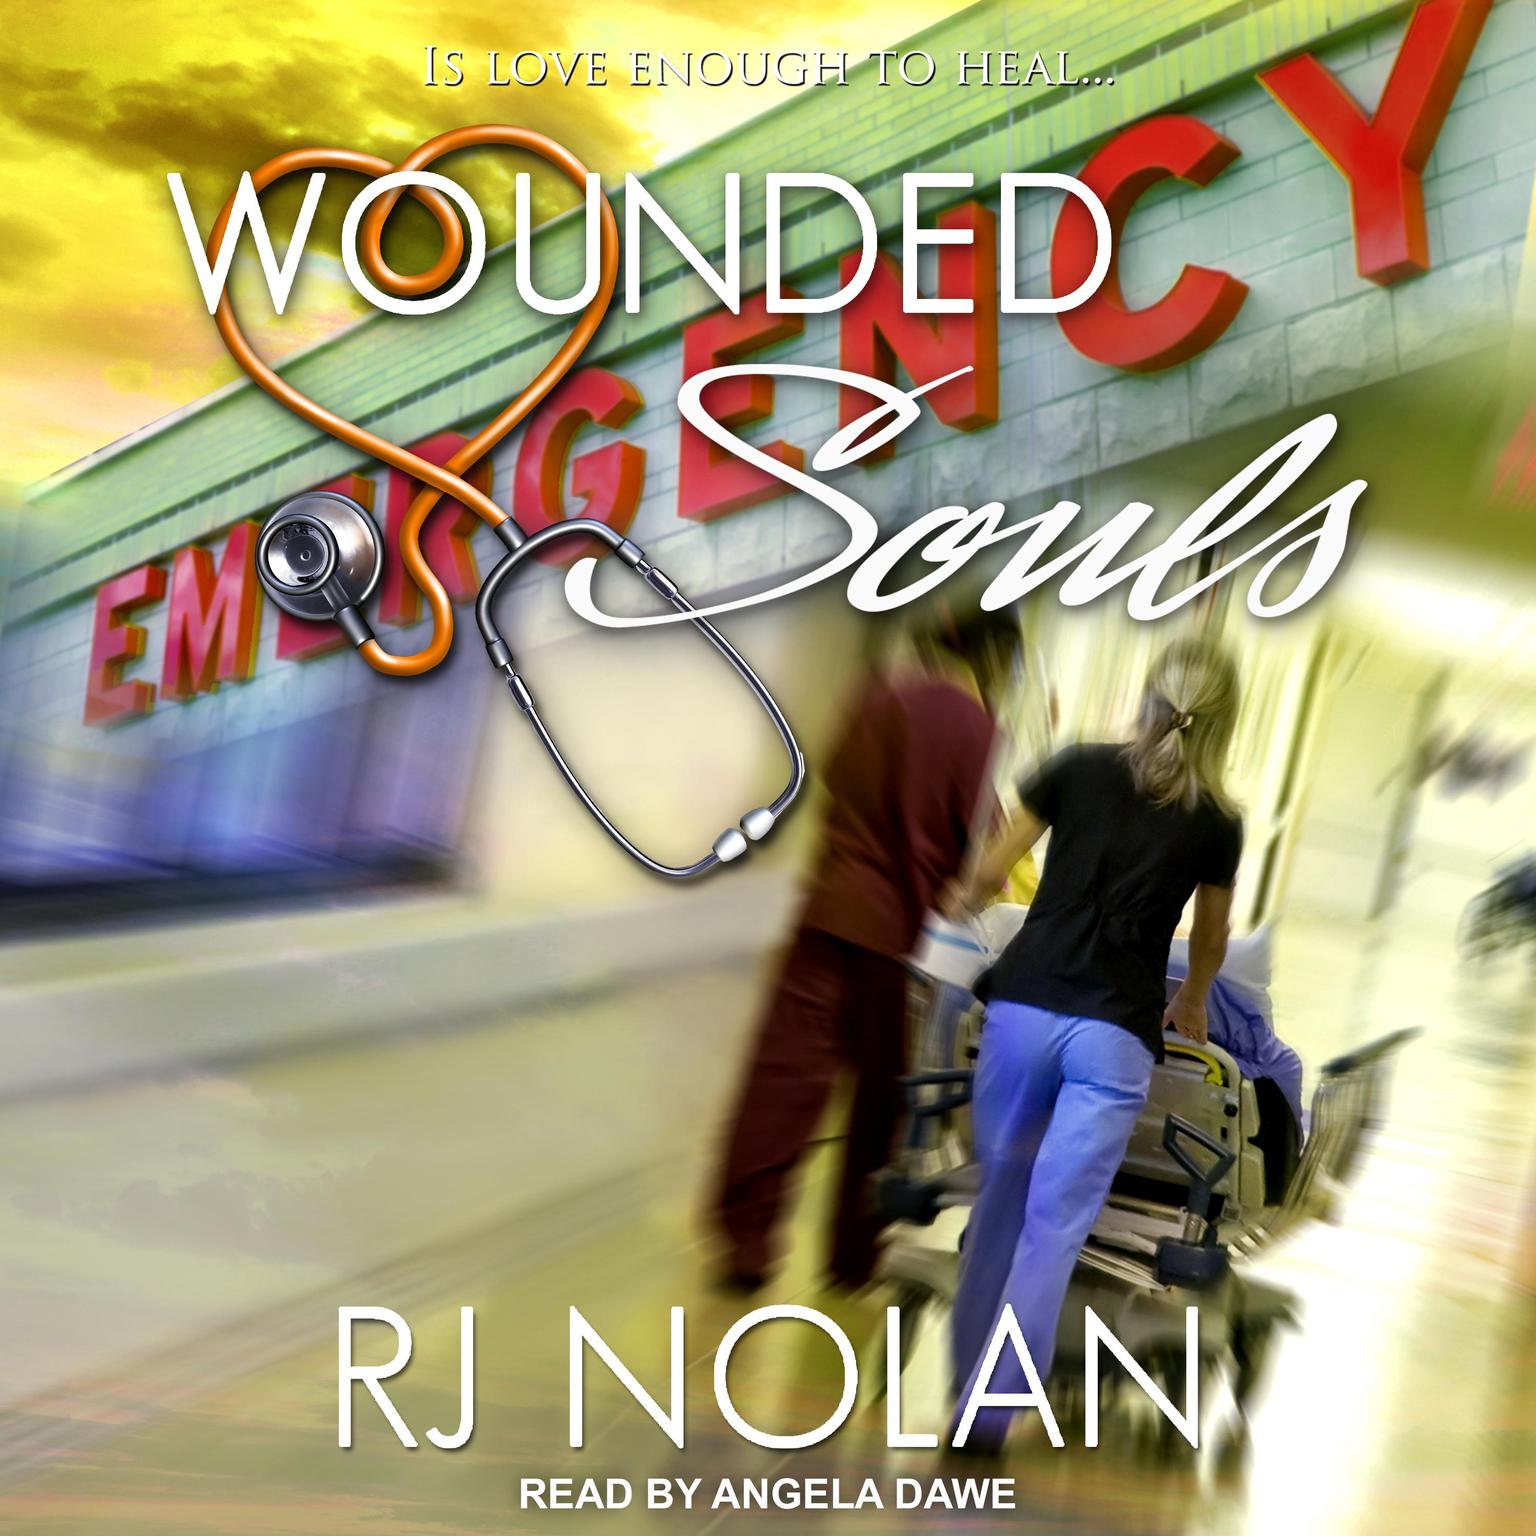 RJ Nolan, Angela Dawe: Wounded Souls (AudiobookFormat, 2019, Ylva)